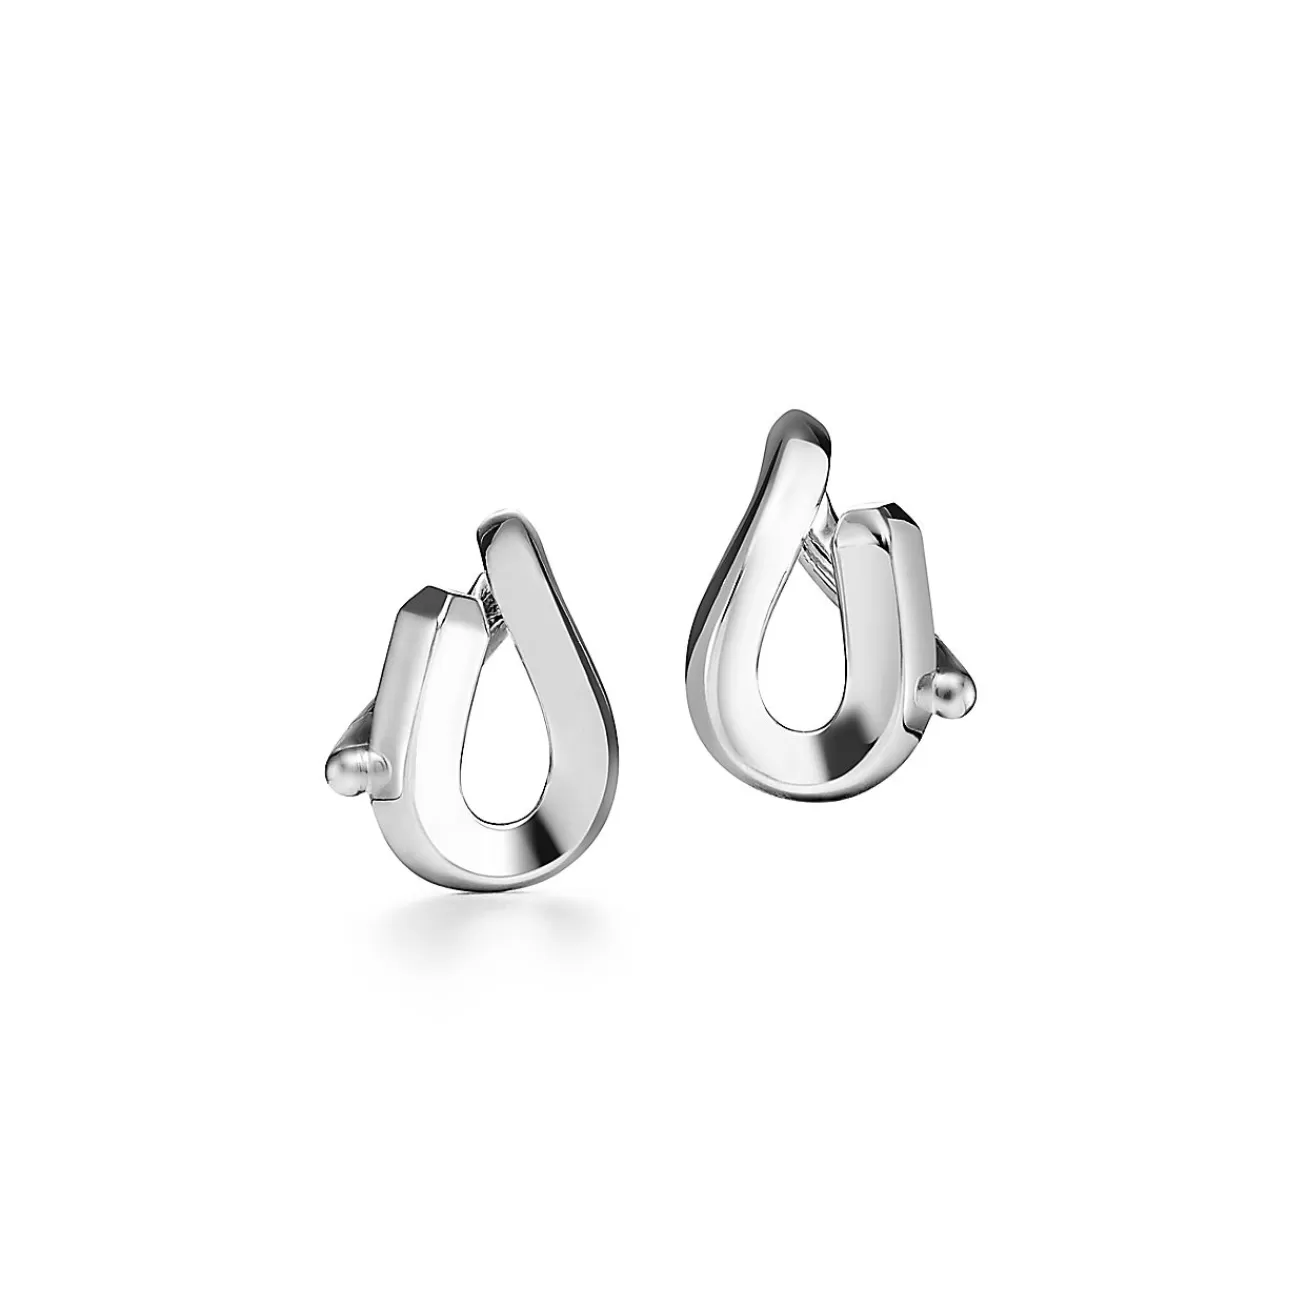 Tiffany & Co. Tiffany Forge Single-link Earrings in High- polished Sterling Silver | ^ Earrings | Men's Jewelry